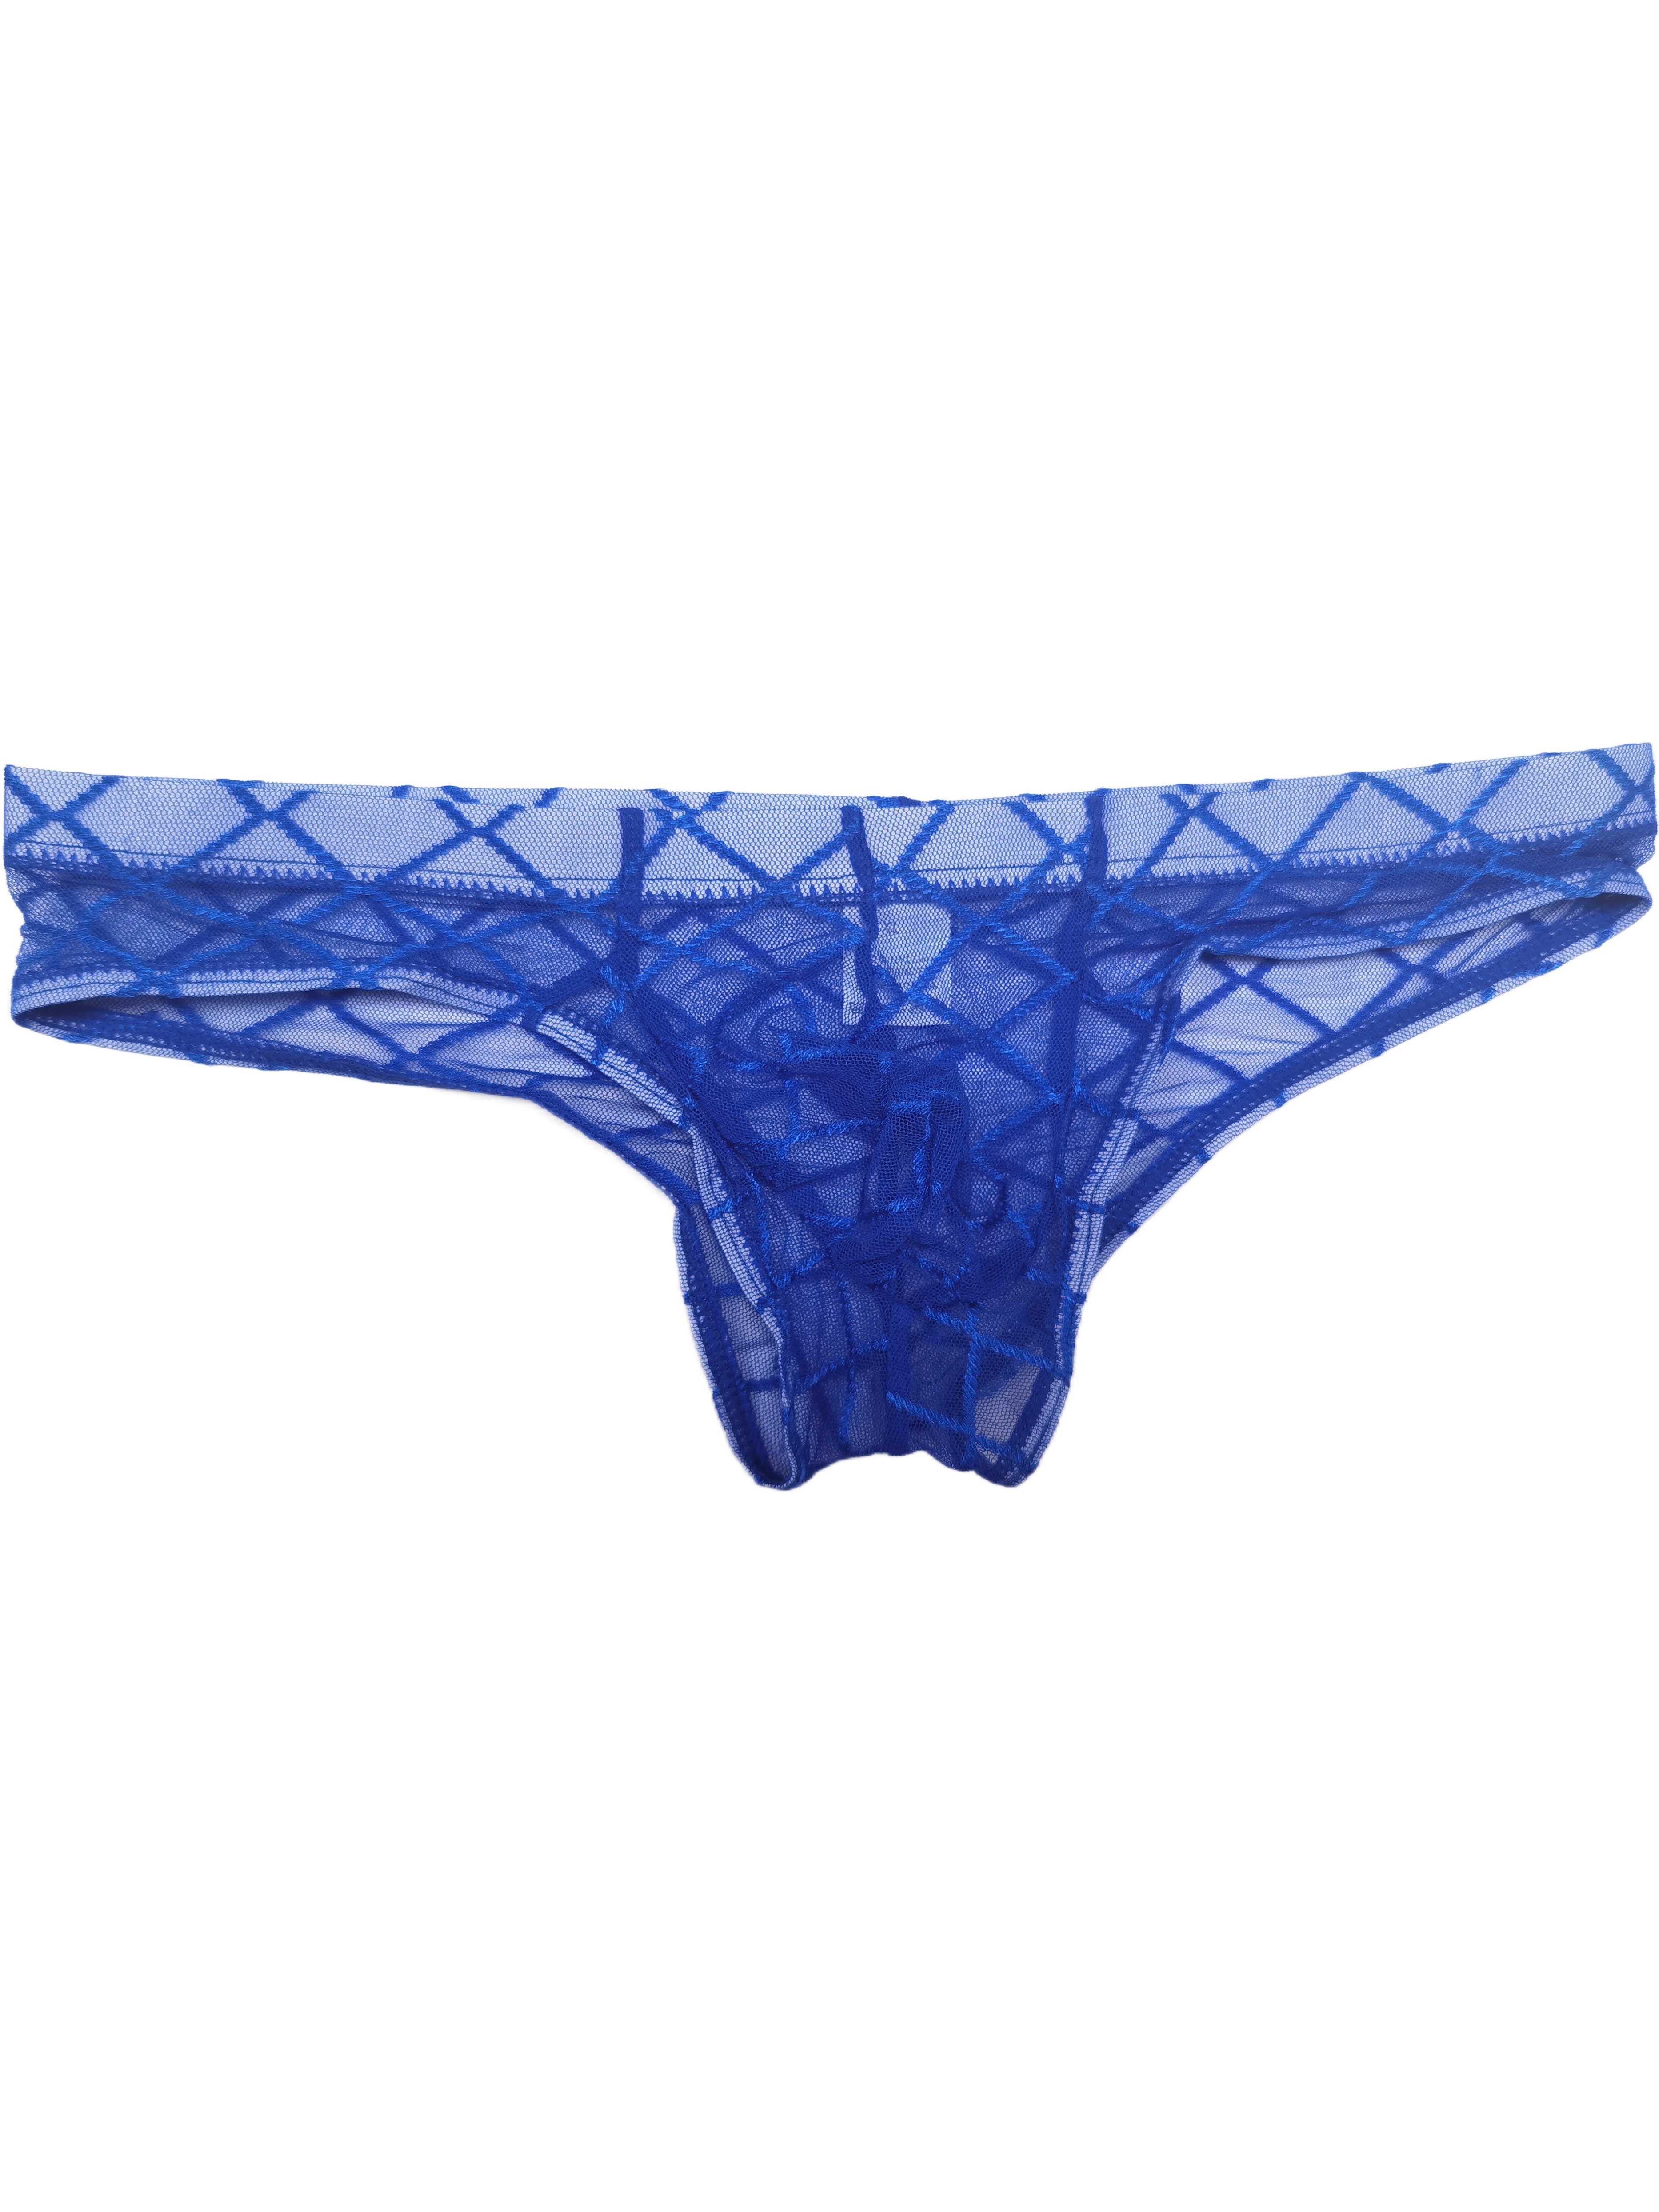 Plastic Bikini Panties PVC Underwear 3 Pack (XX-Large, Transparent Blue)